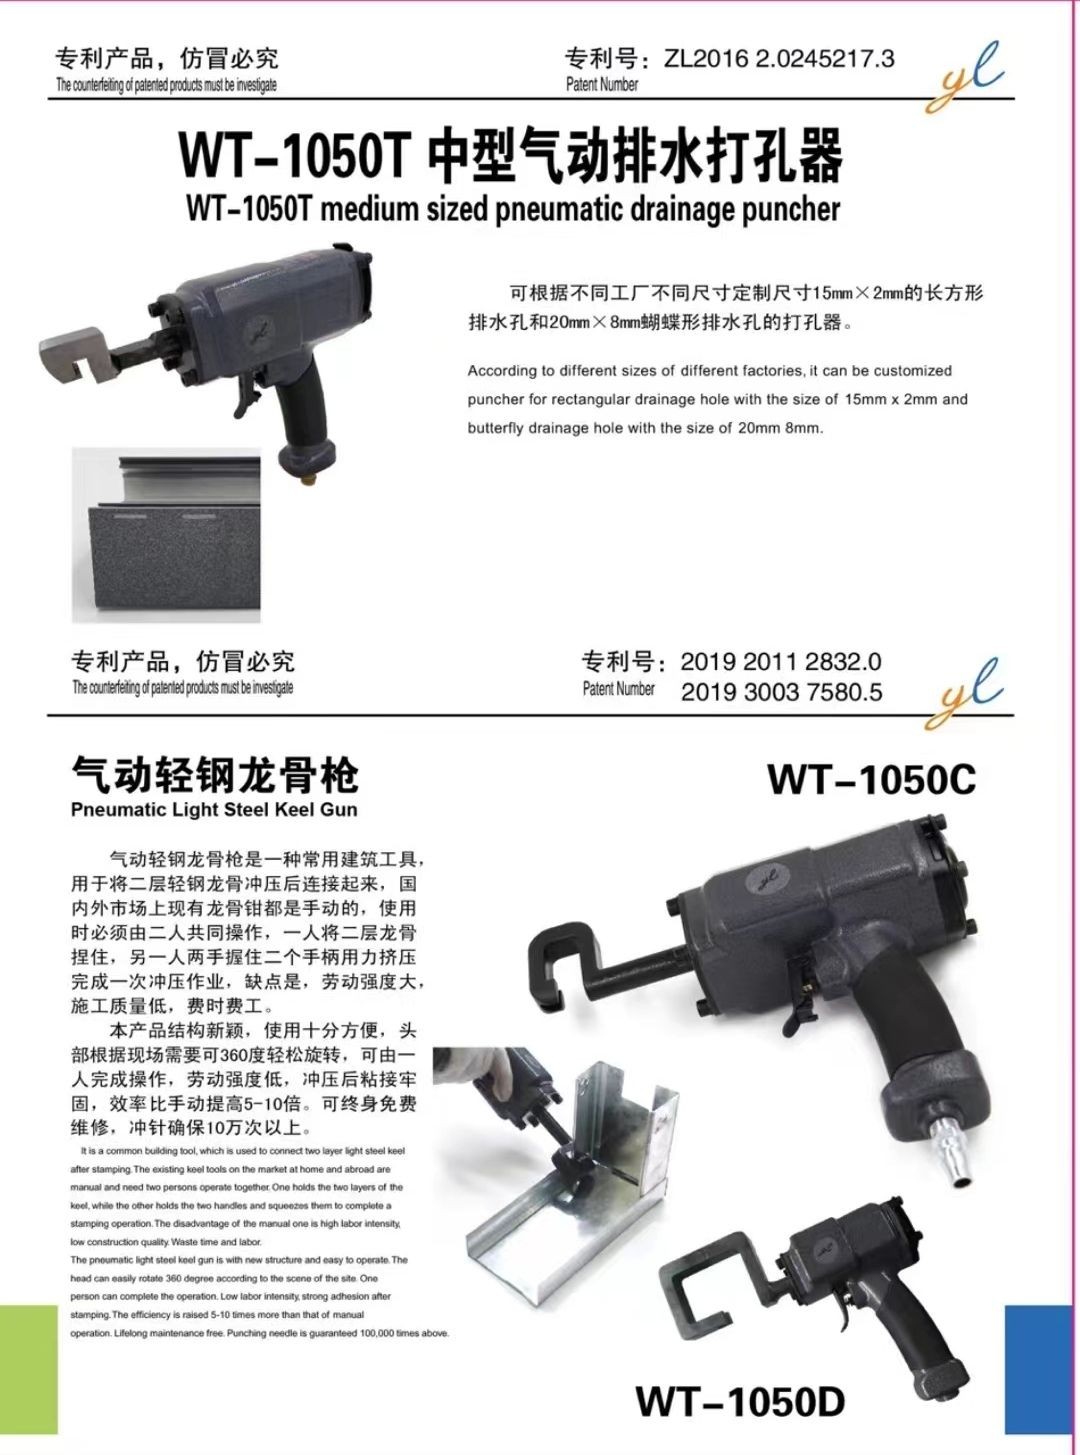 COTV全球直播-杭州亚良气动工具有限公司研发生产销售五金气动工具系列产品，欢迎大家光临！